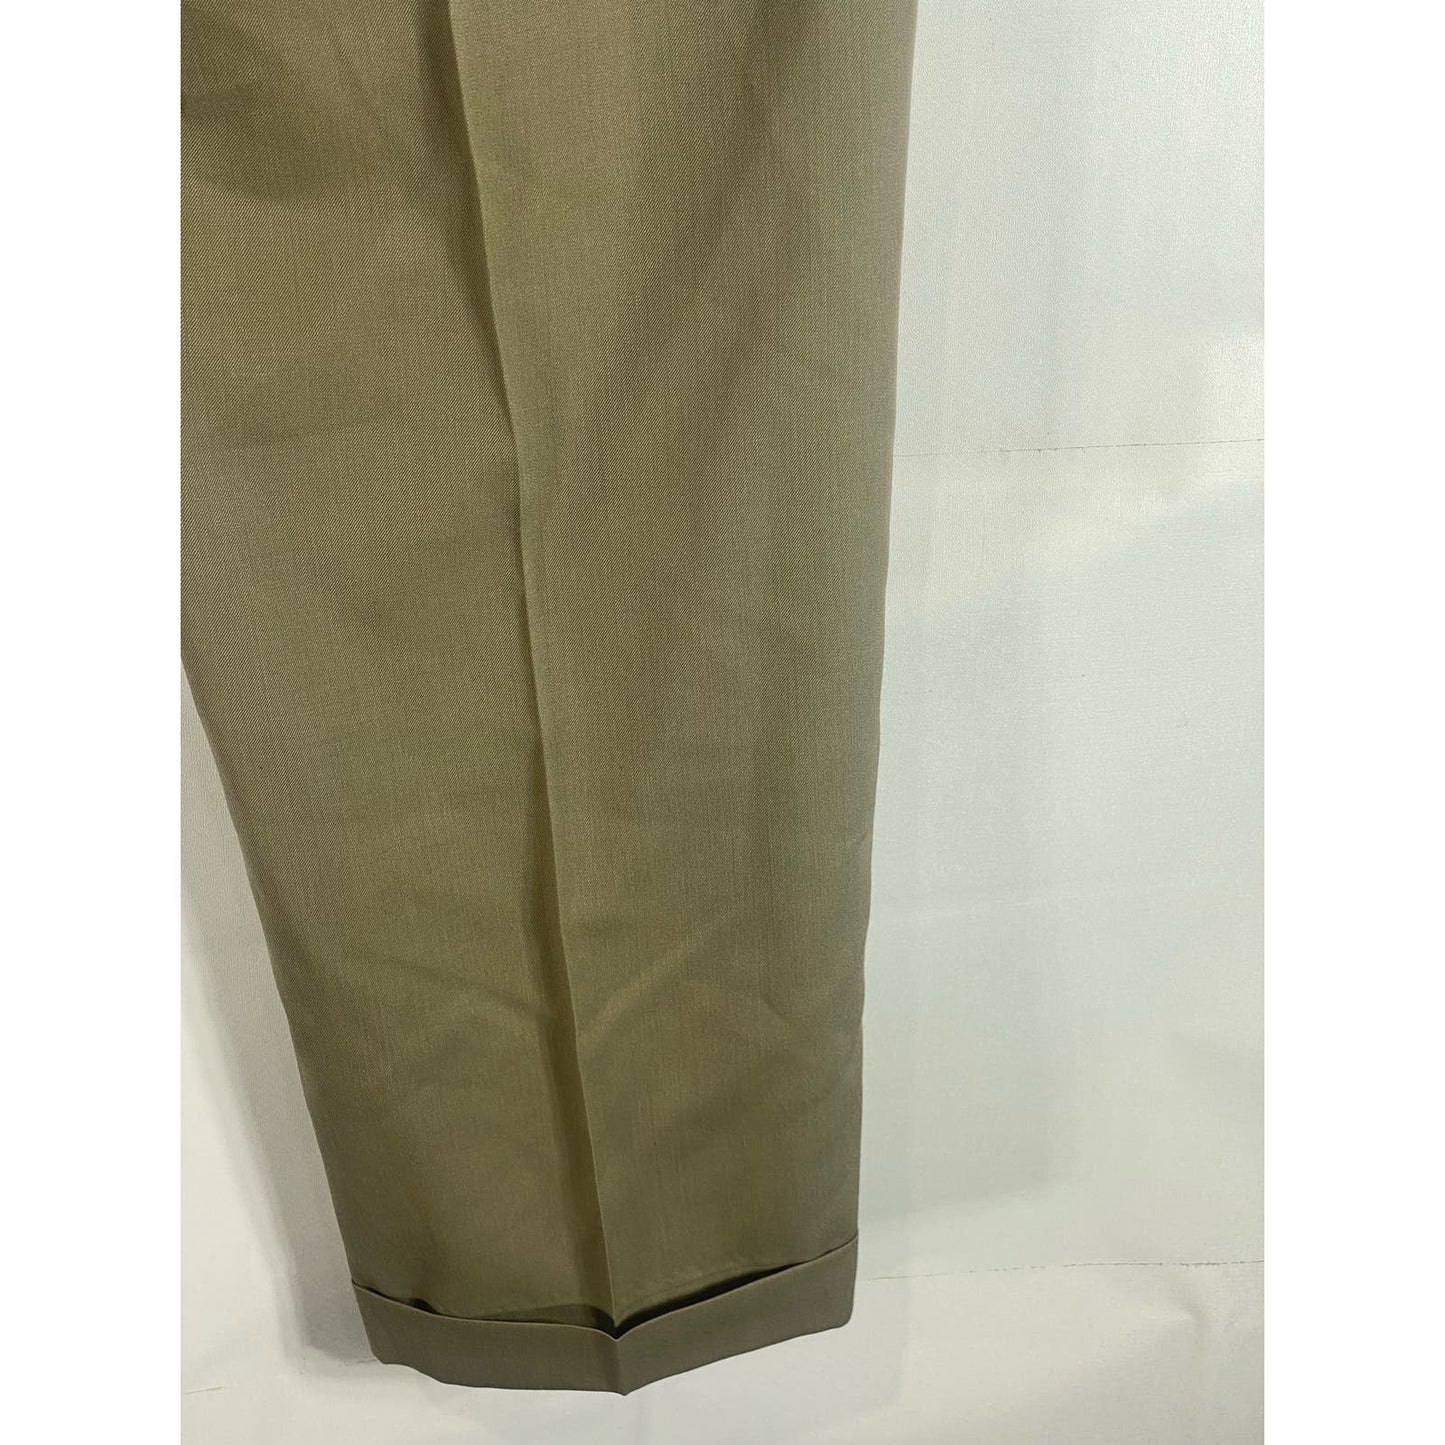 TOMMY HILFIGER Men's Tan Vintage Pleated Front Cuffed Dress Pants SZ 40X31